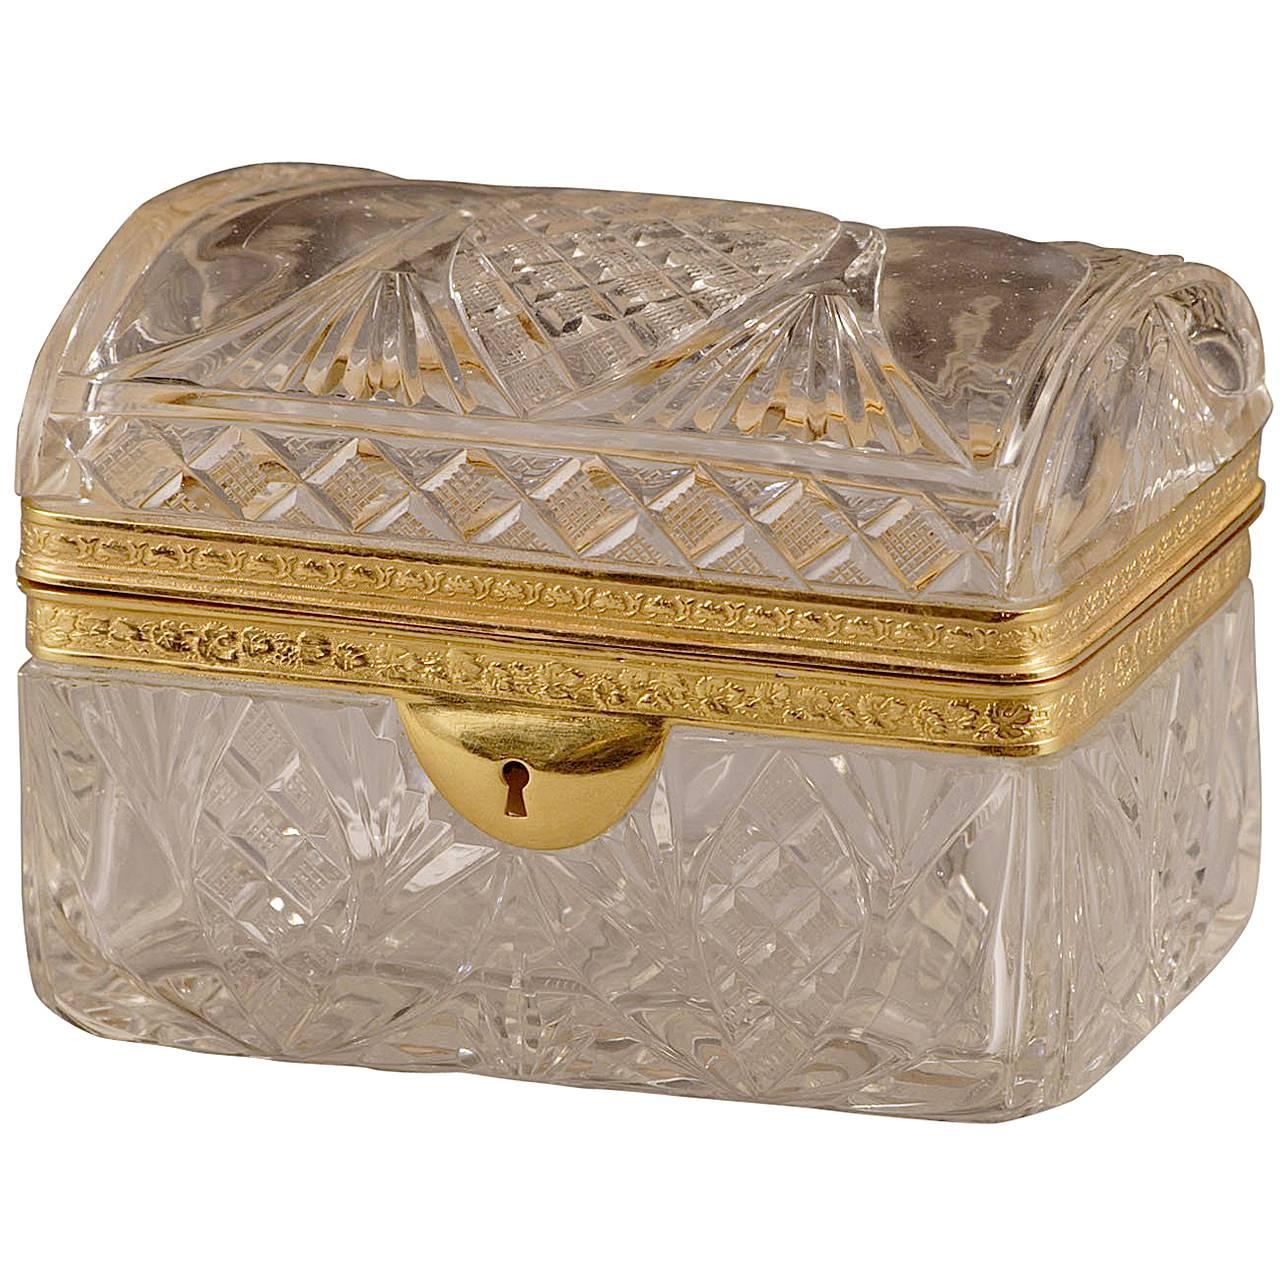 19th Century Cut-Crystal Jewelry Box